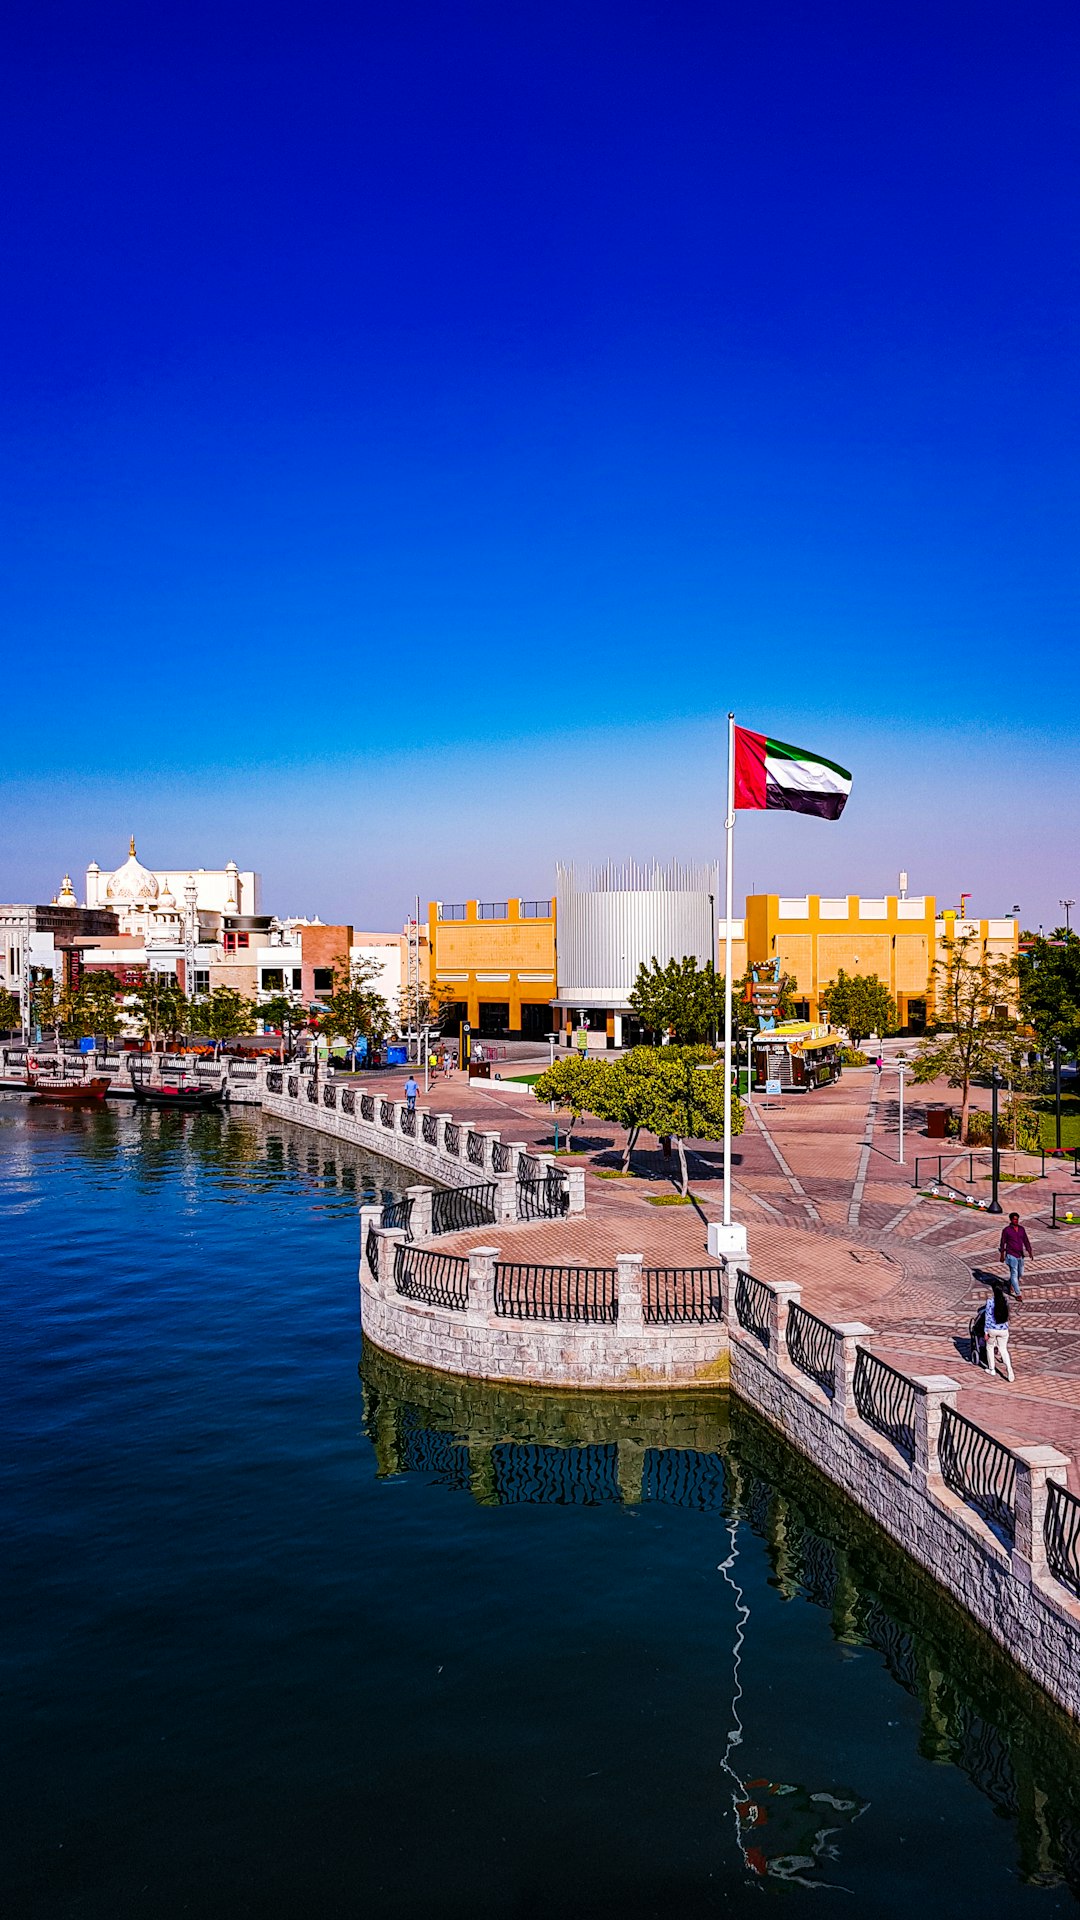 Town photo spot Riverland Dubai - Sheikh Zayed Road - Dubai - United Arab Emirates Dubai - United Arab Emirates